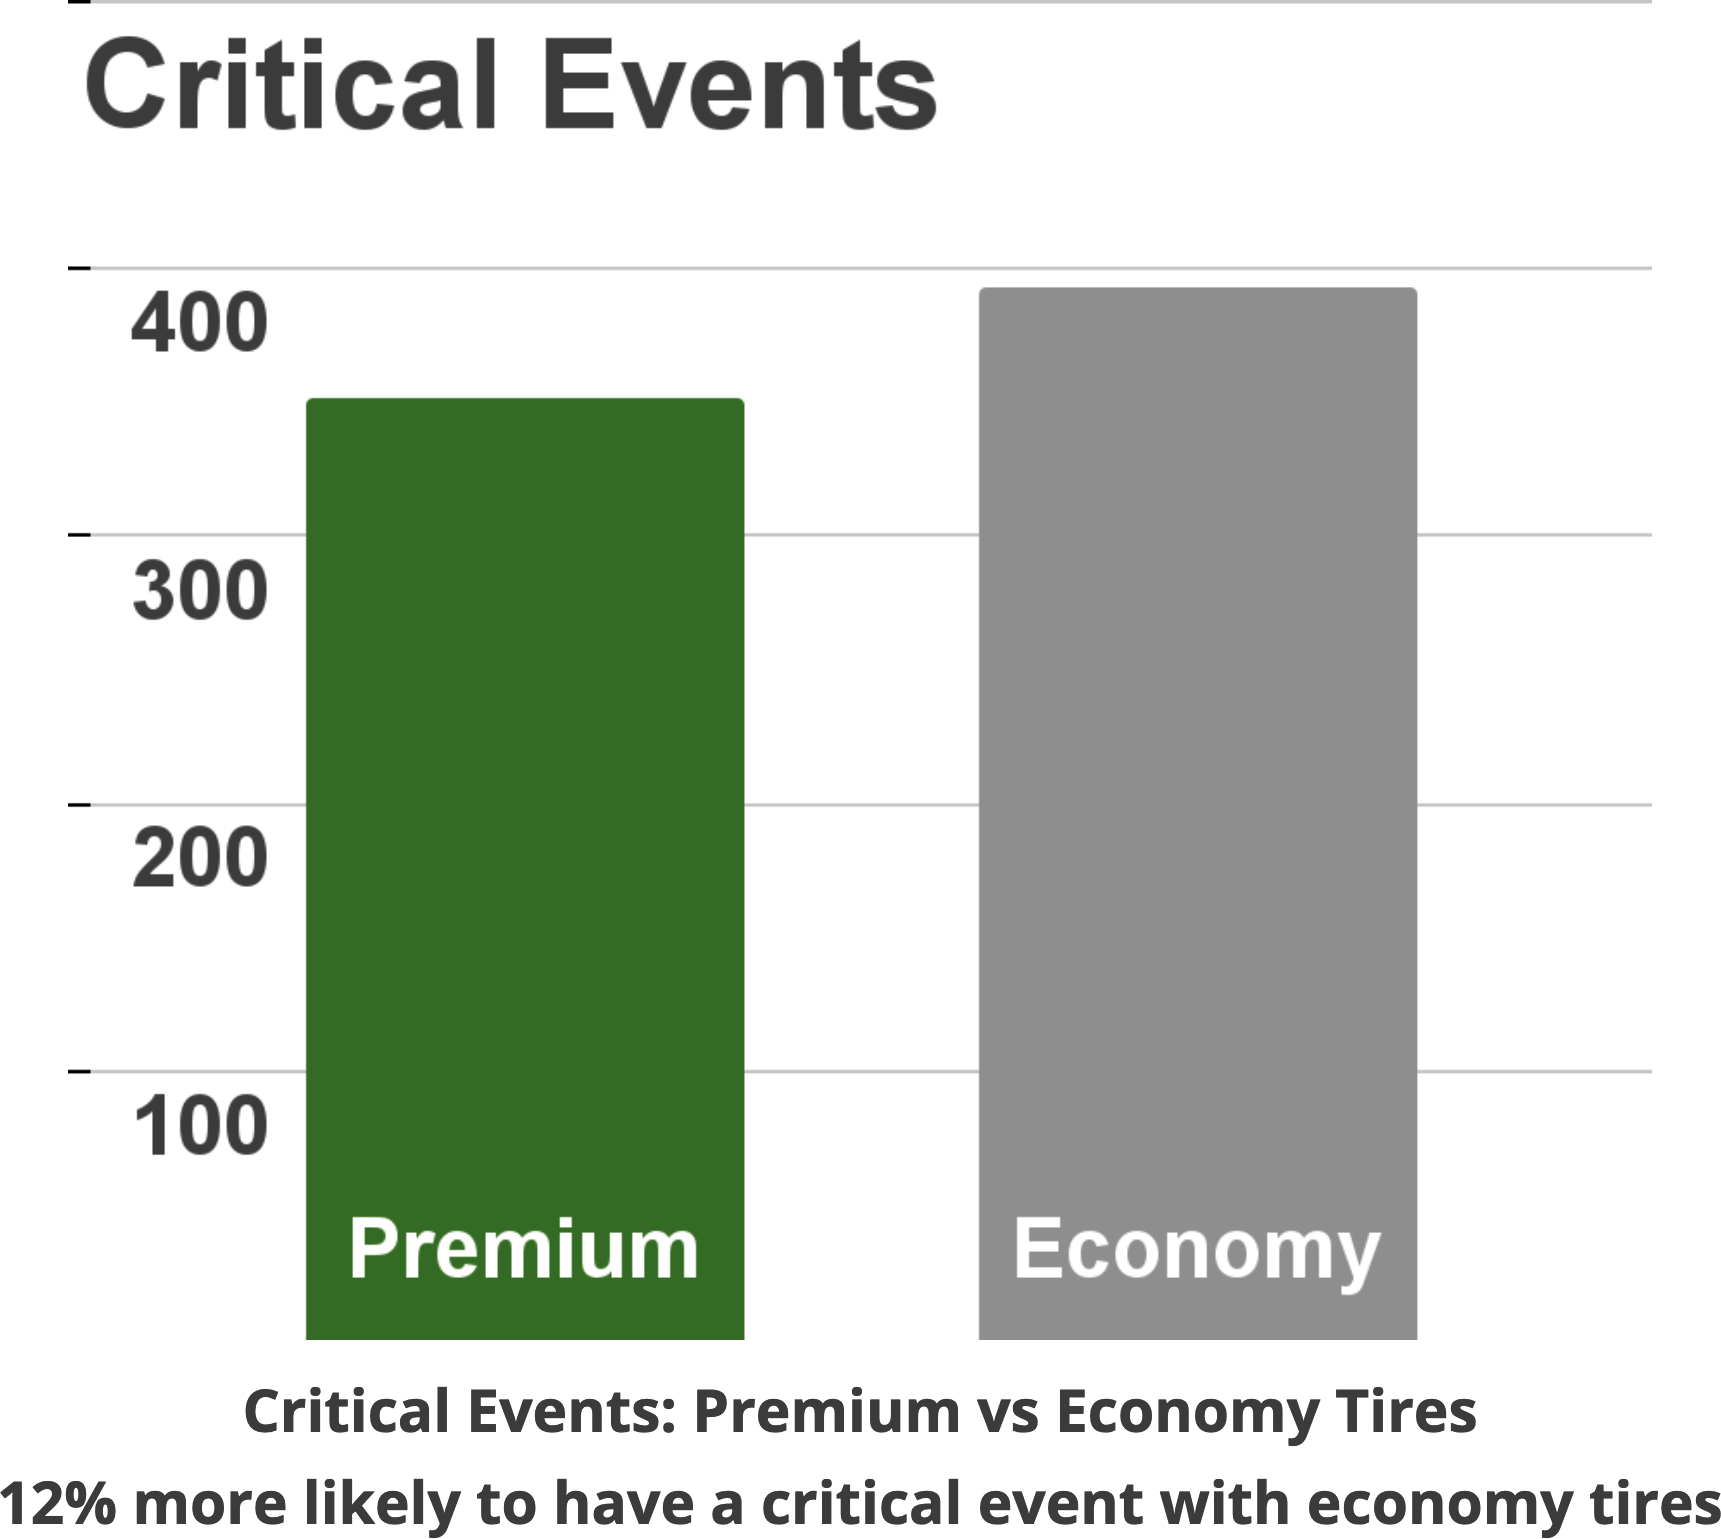 Bar chart comparing critical events: Premium vs Economy tires.